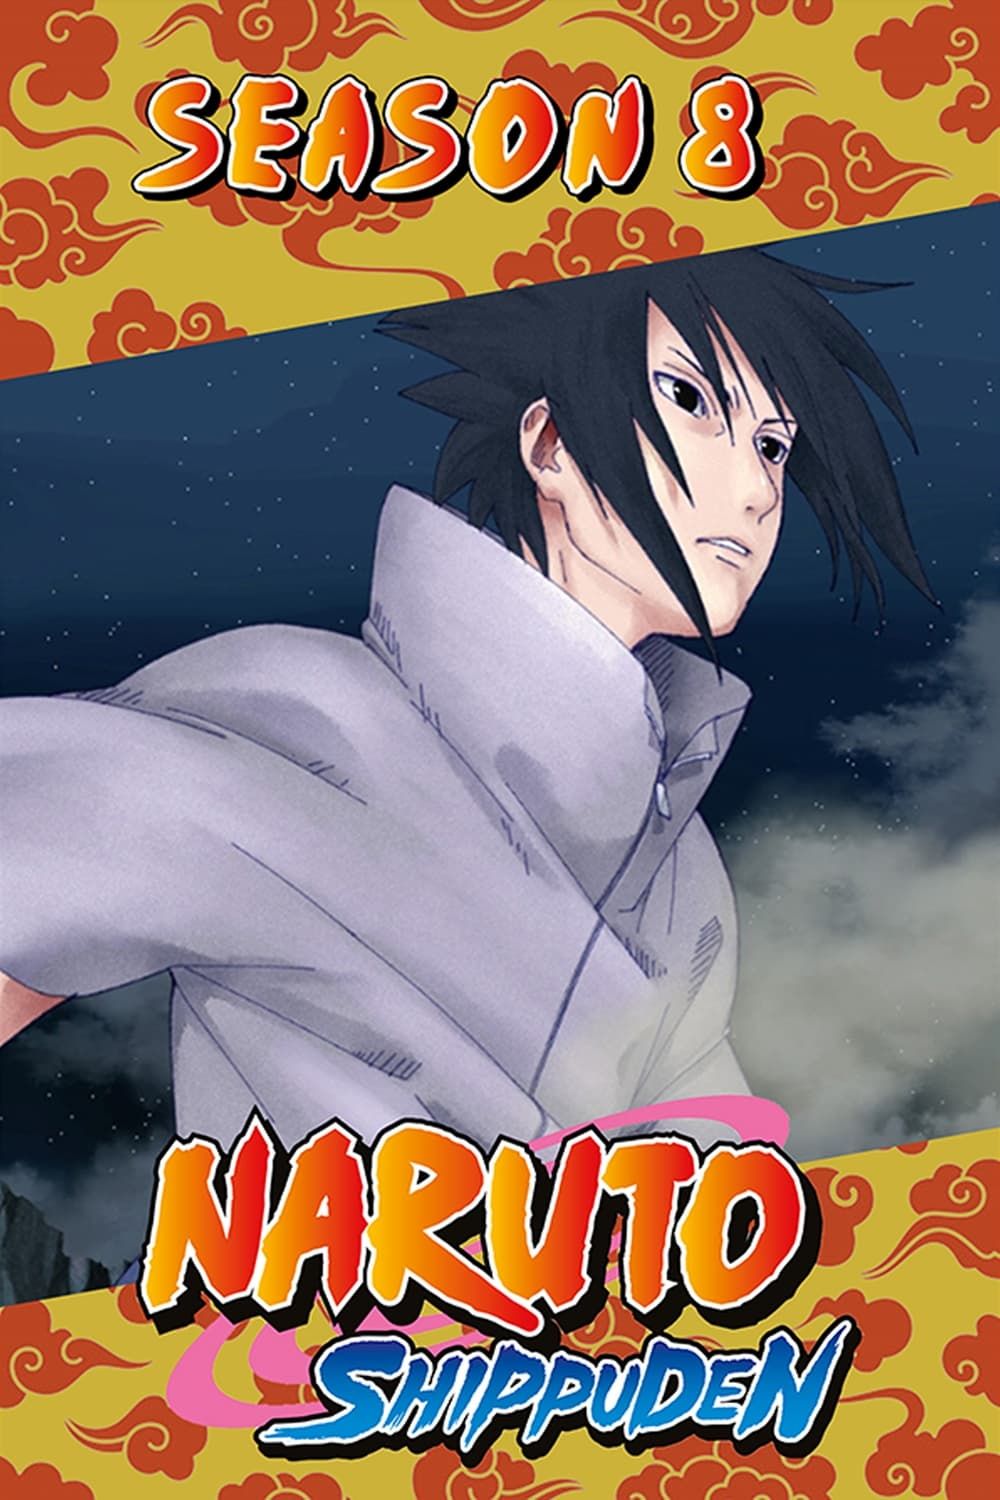 Watch Naruto Shippuden · Two Saviors Full Episodes Online - Plex